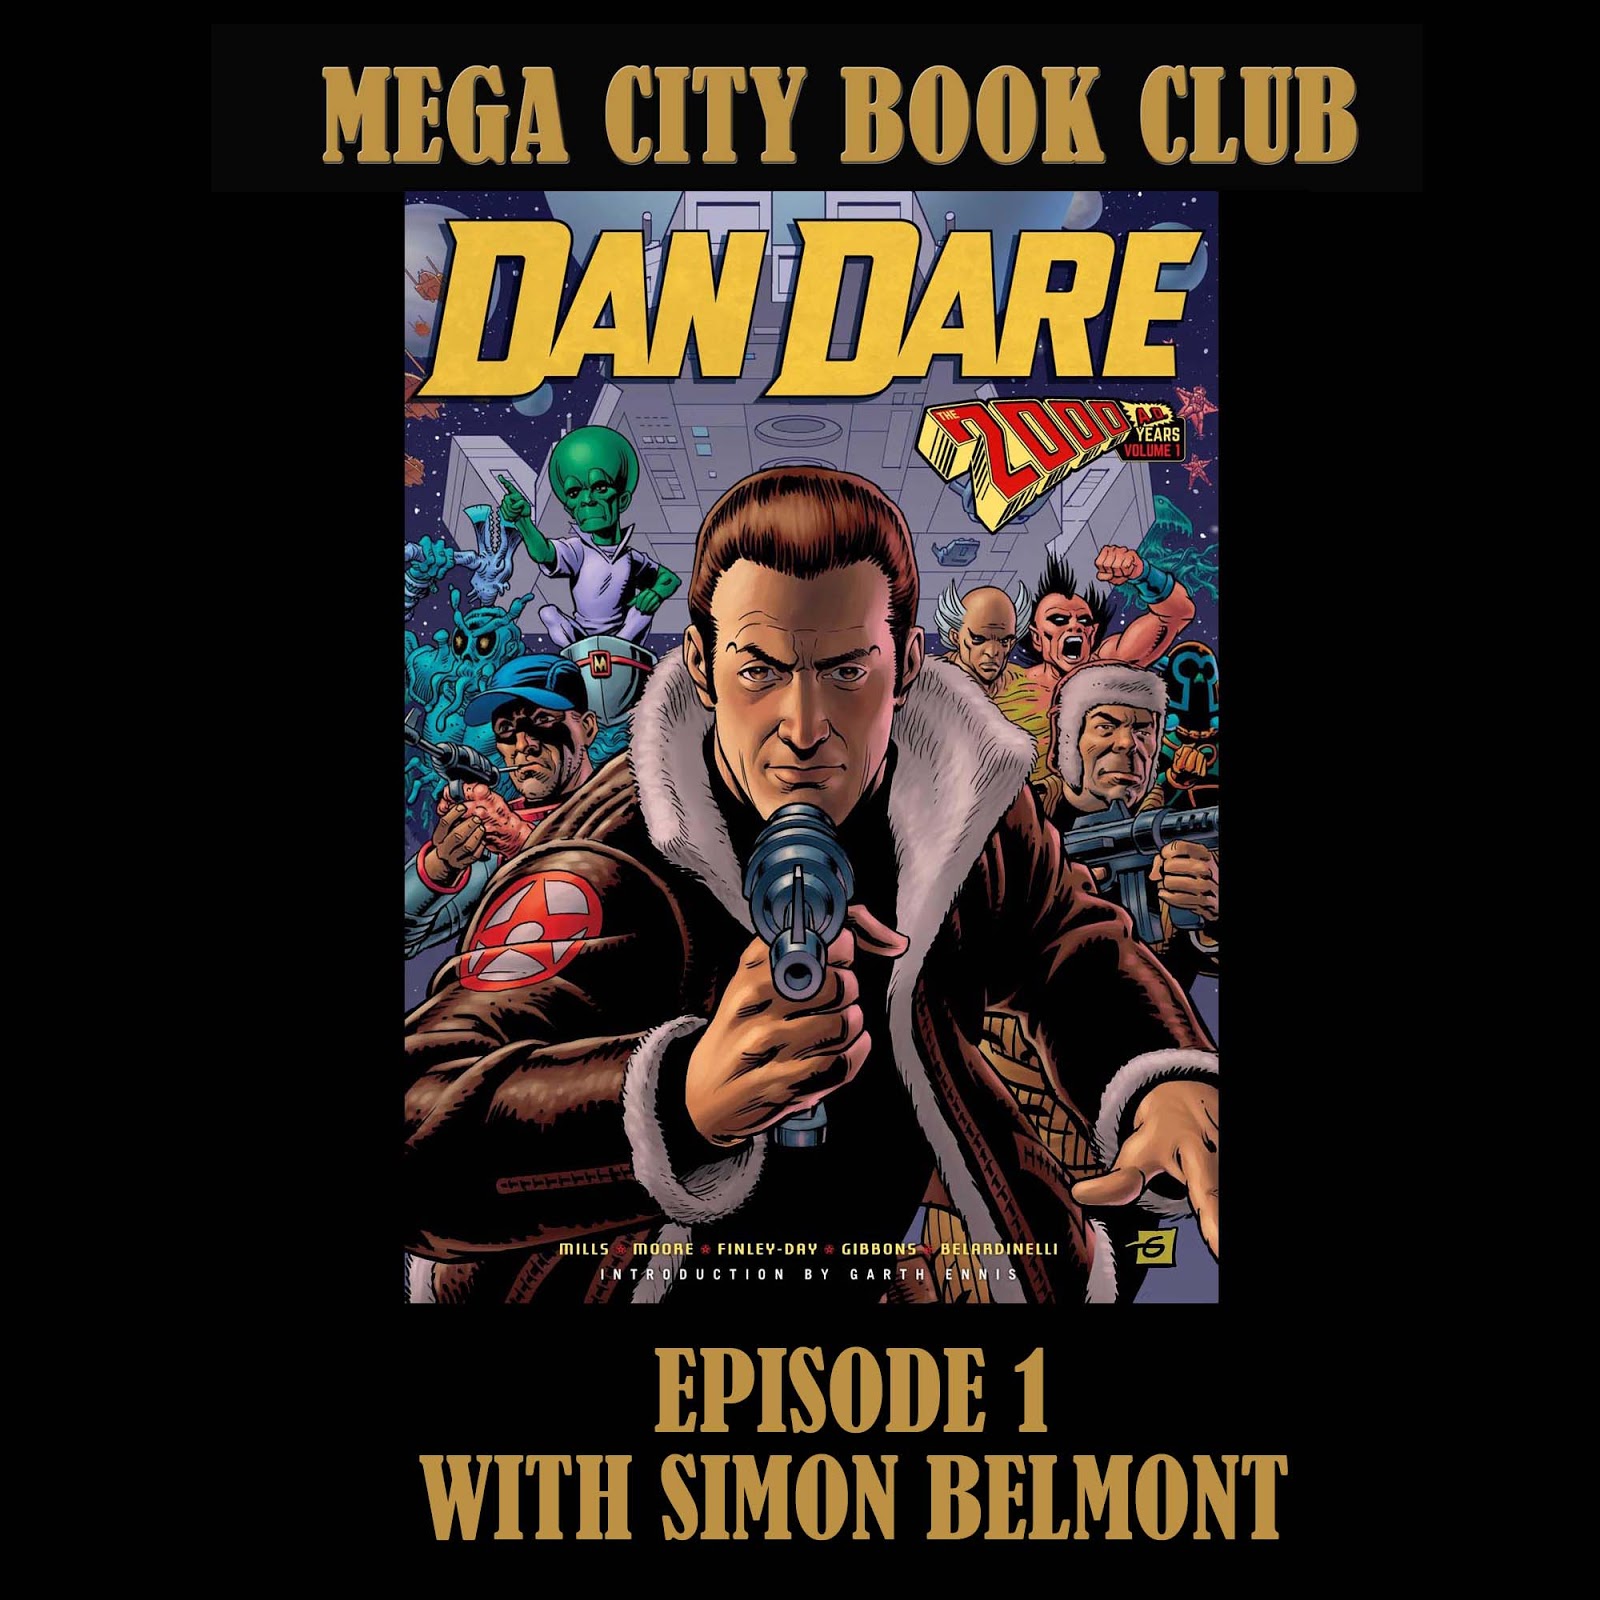 Mega City Book Club Episode 1 - Dan Dare